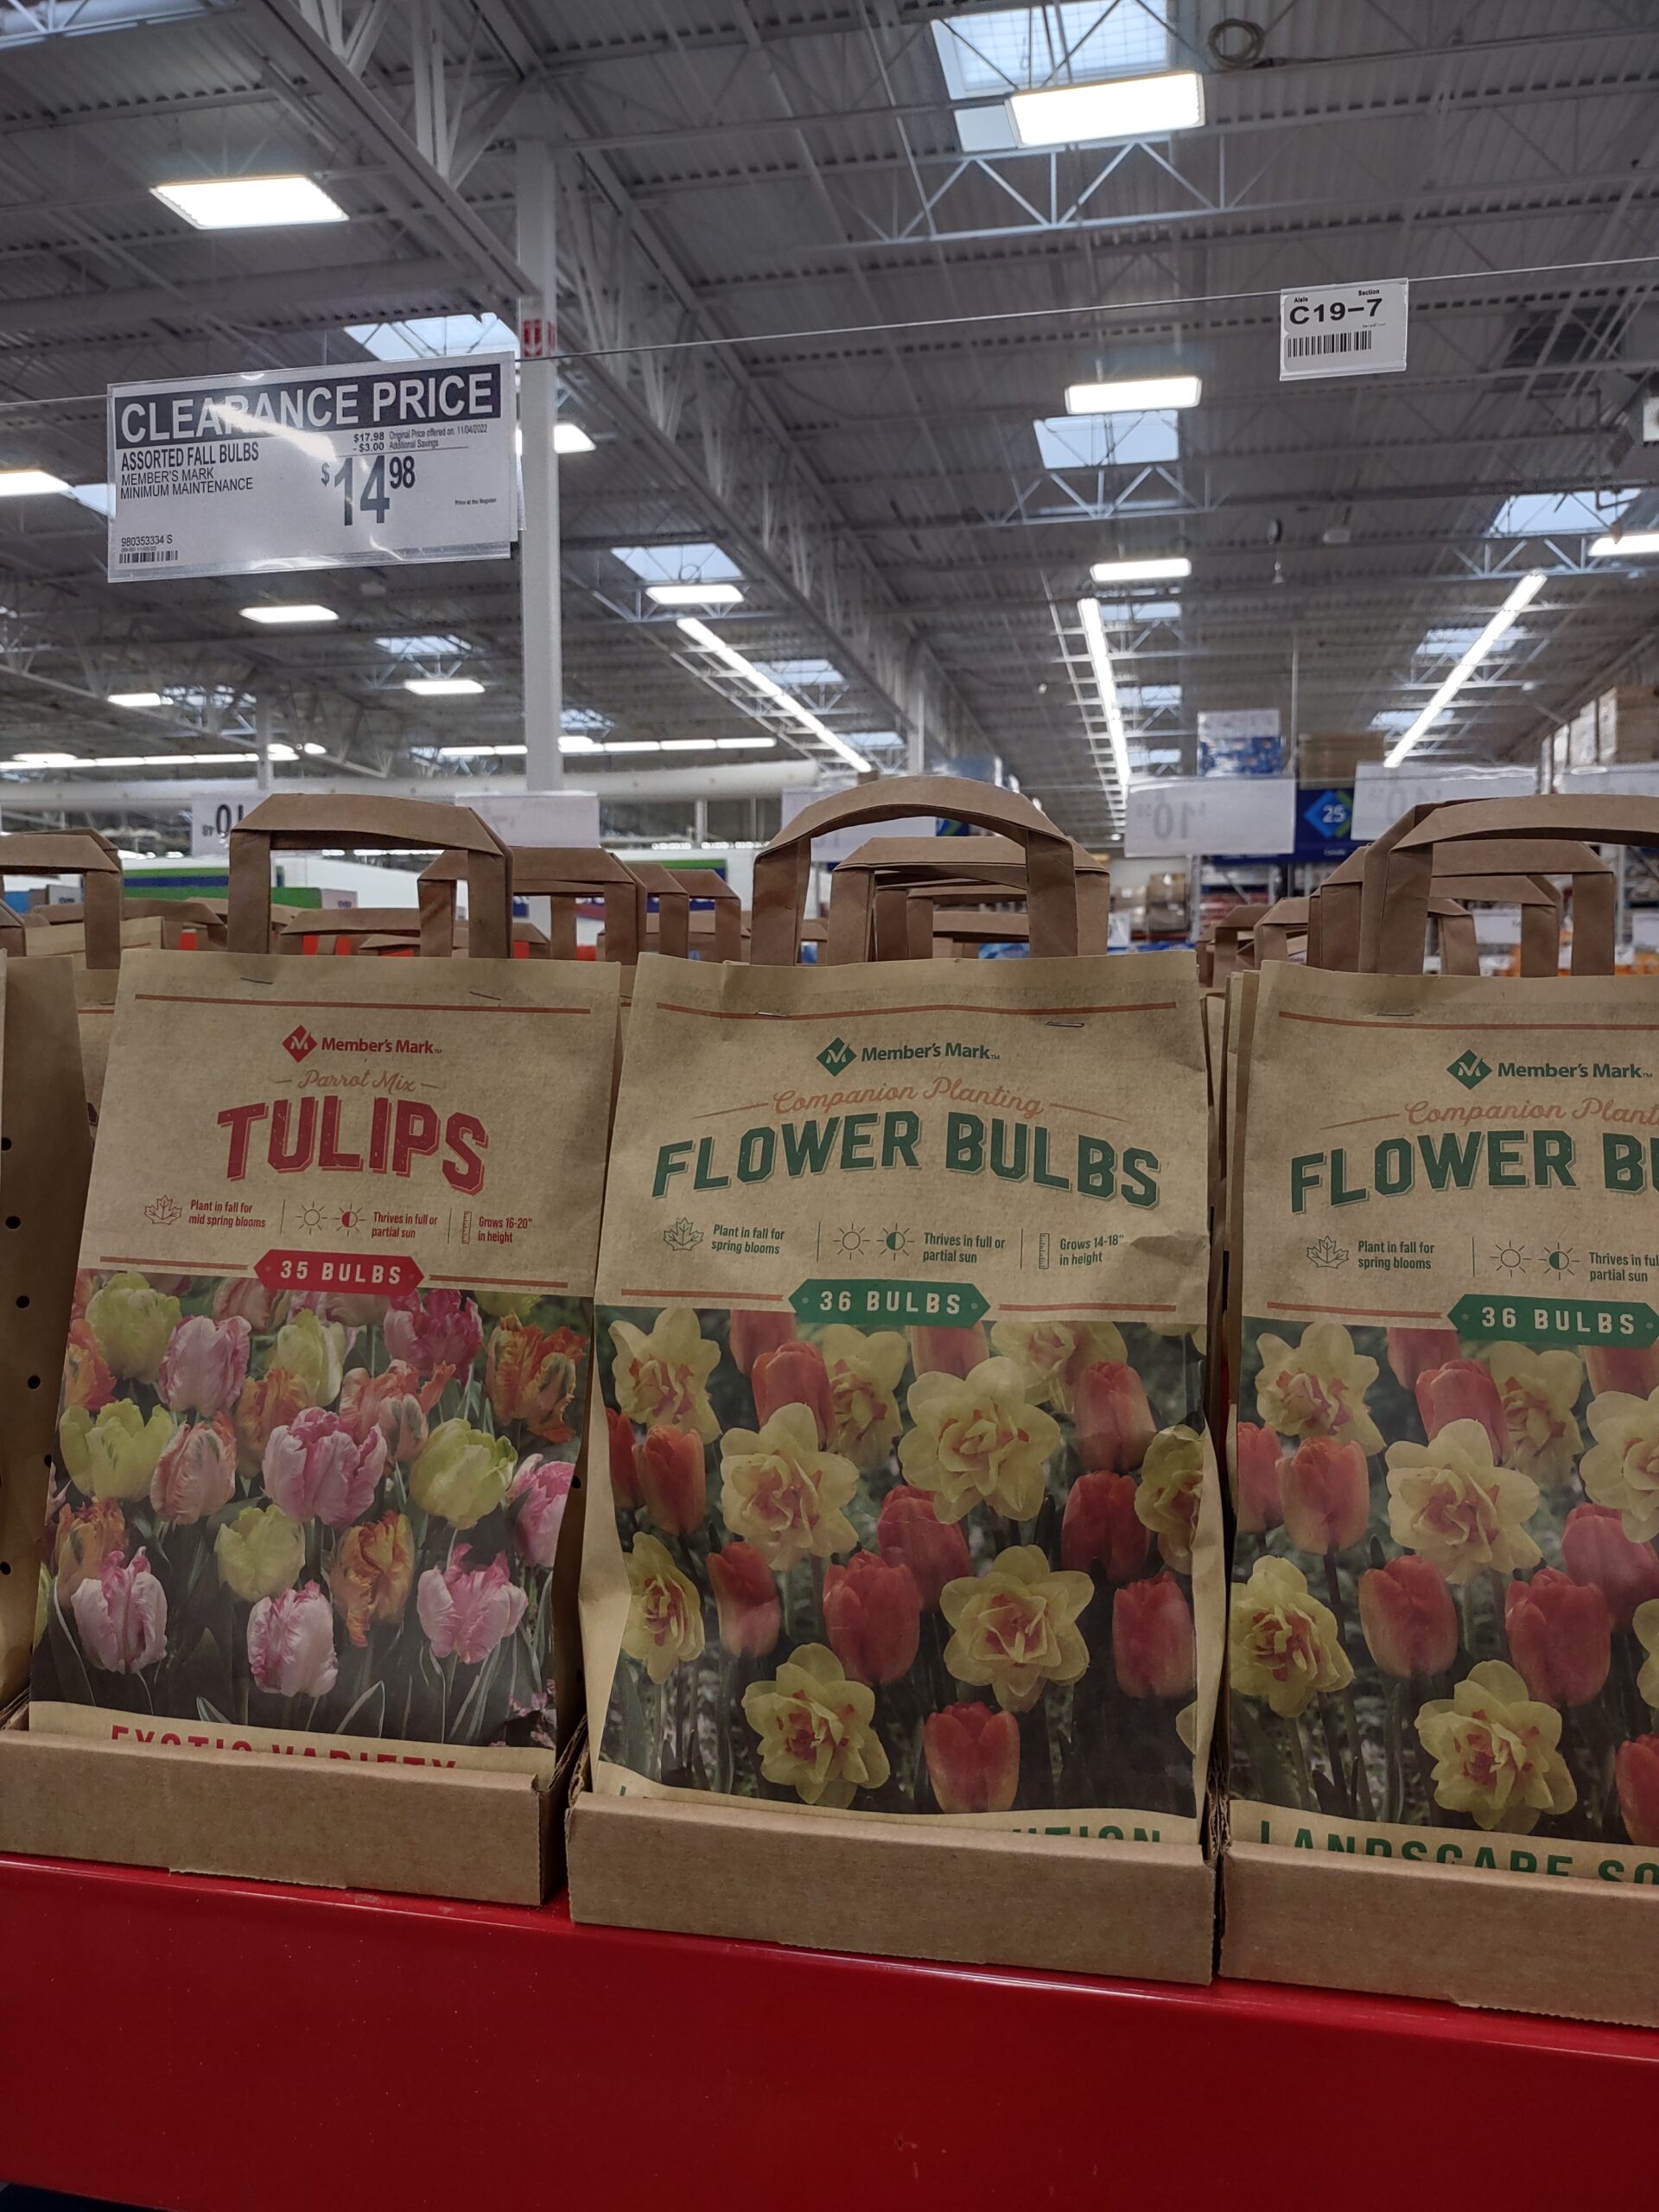 Hyacinth, Tulip & Flower Bulbs $4.98 at Sam’s